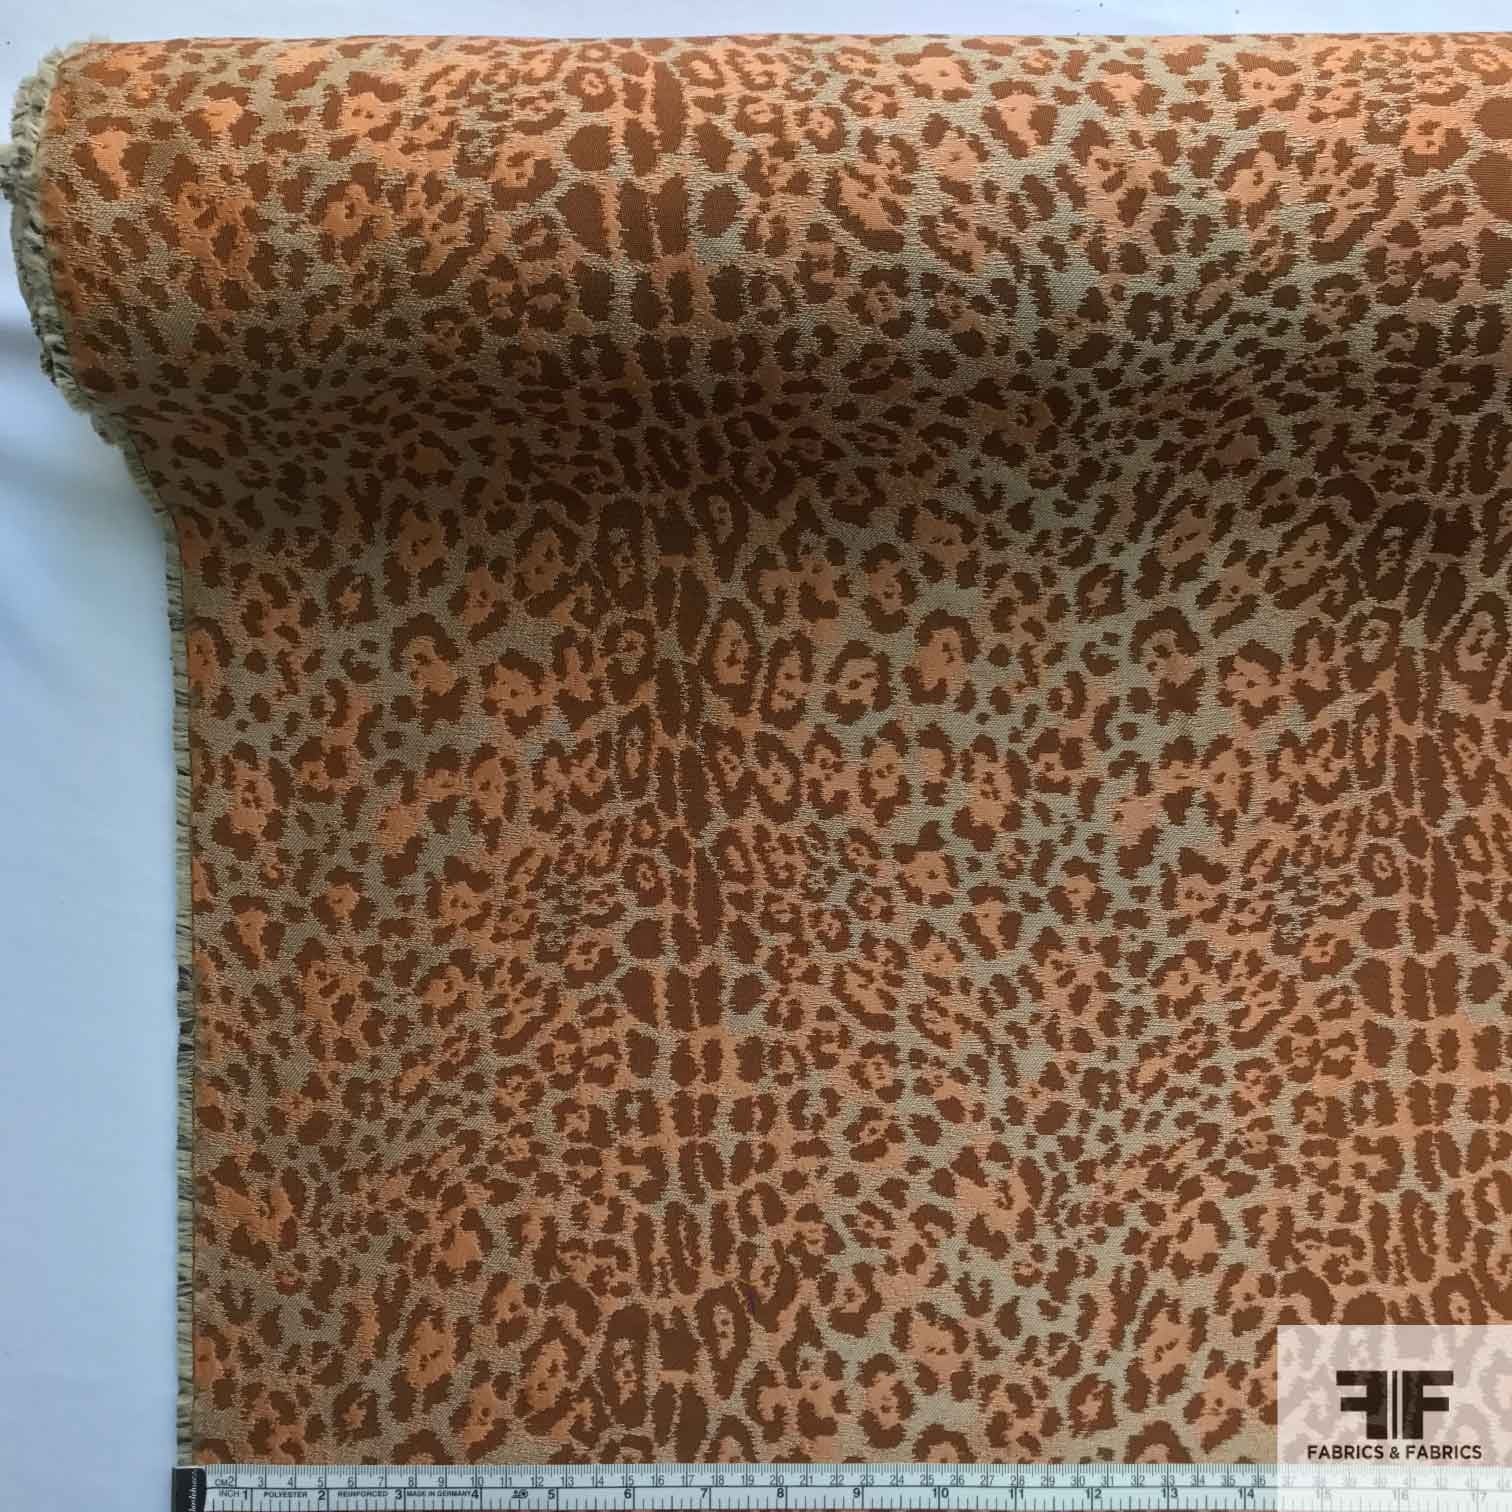 Metallic Cheetah Brocade - Copper/Orange/Gold